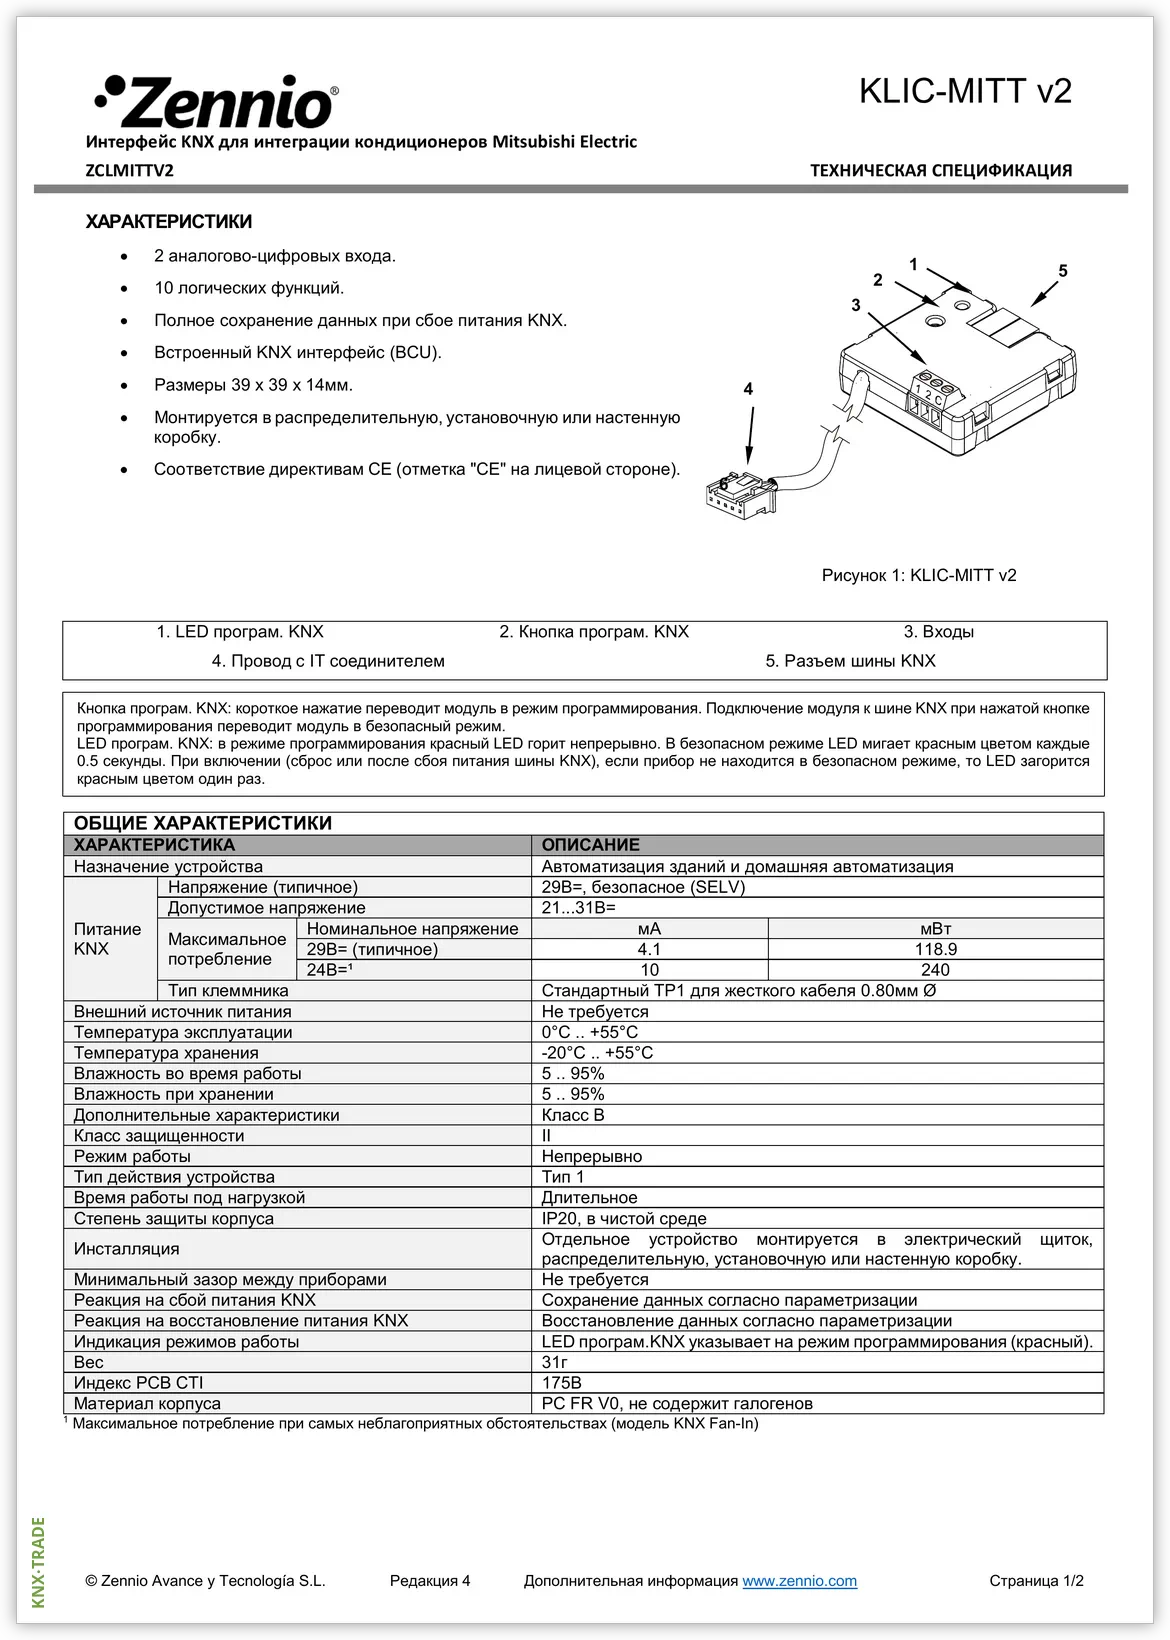 Datasheet (1) Zennio [ZCLMITTV2] KLIC-MITT v2 / Шлюз KNX для управления кондиционерами Mitsubishi Electric